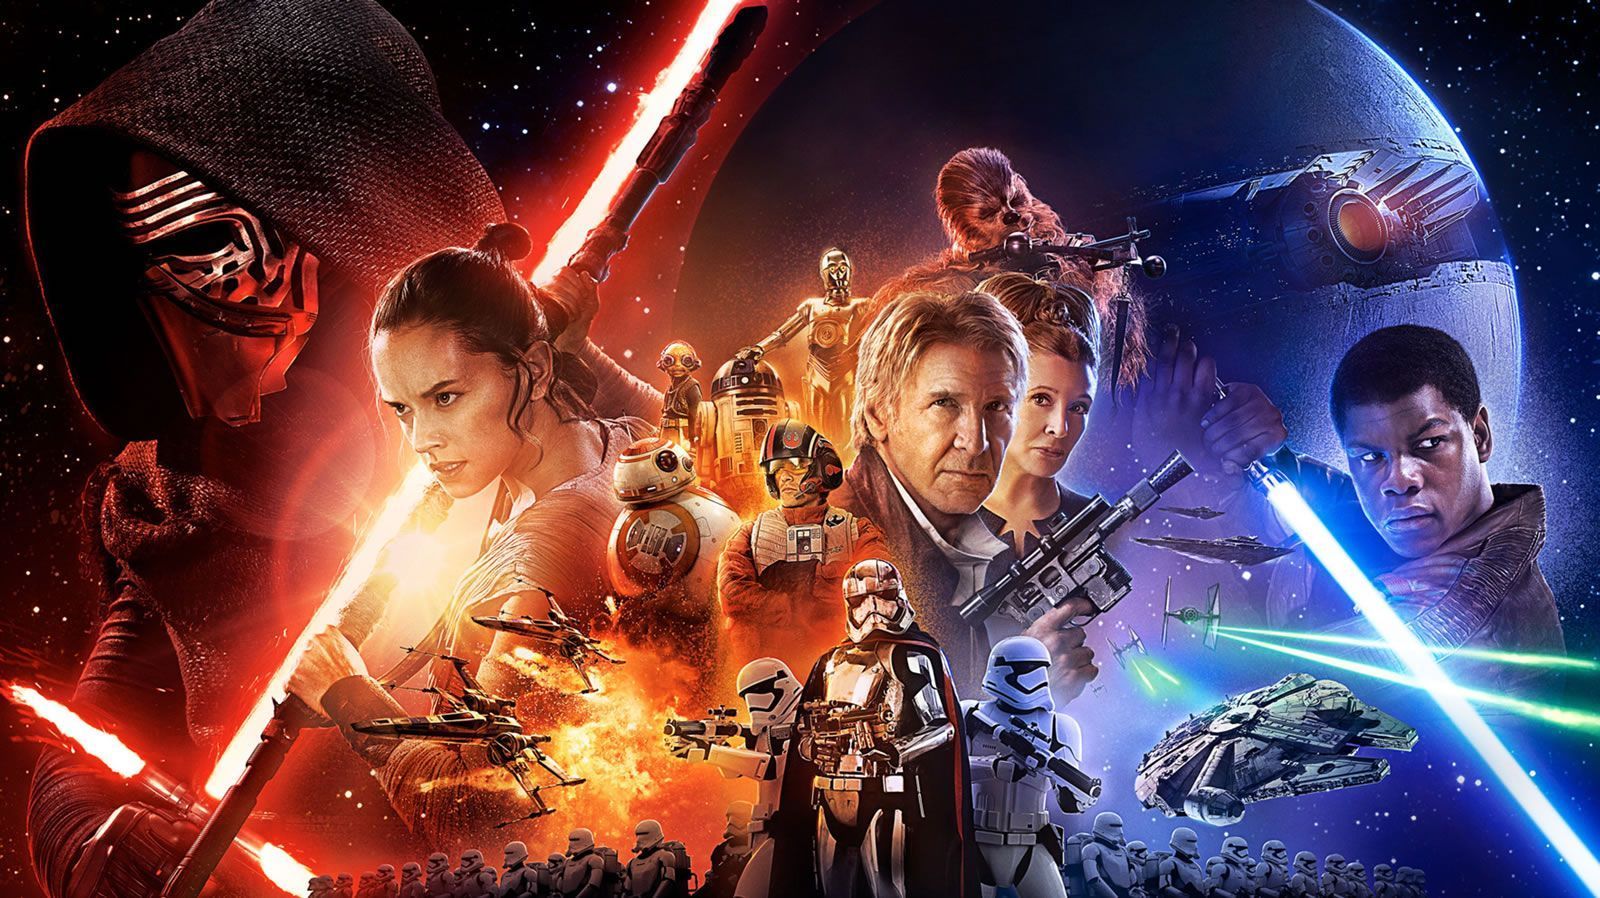 Star Wars The Force Awakens Wallpaper 7 - Windows 10 News and Updates